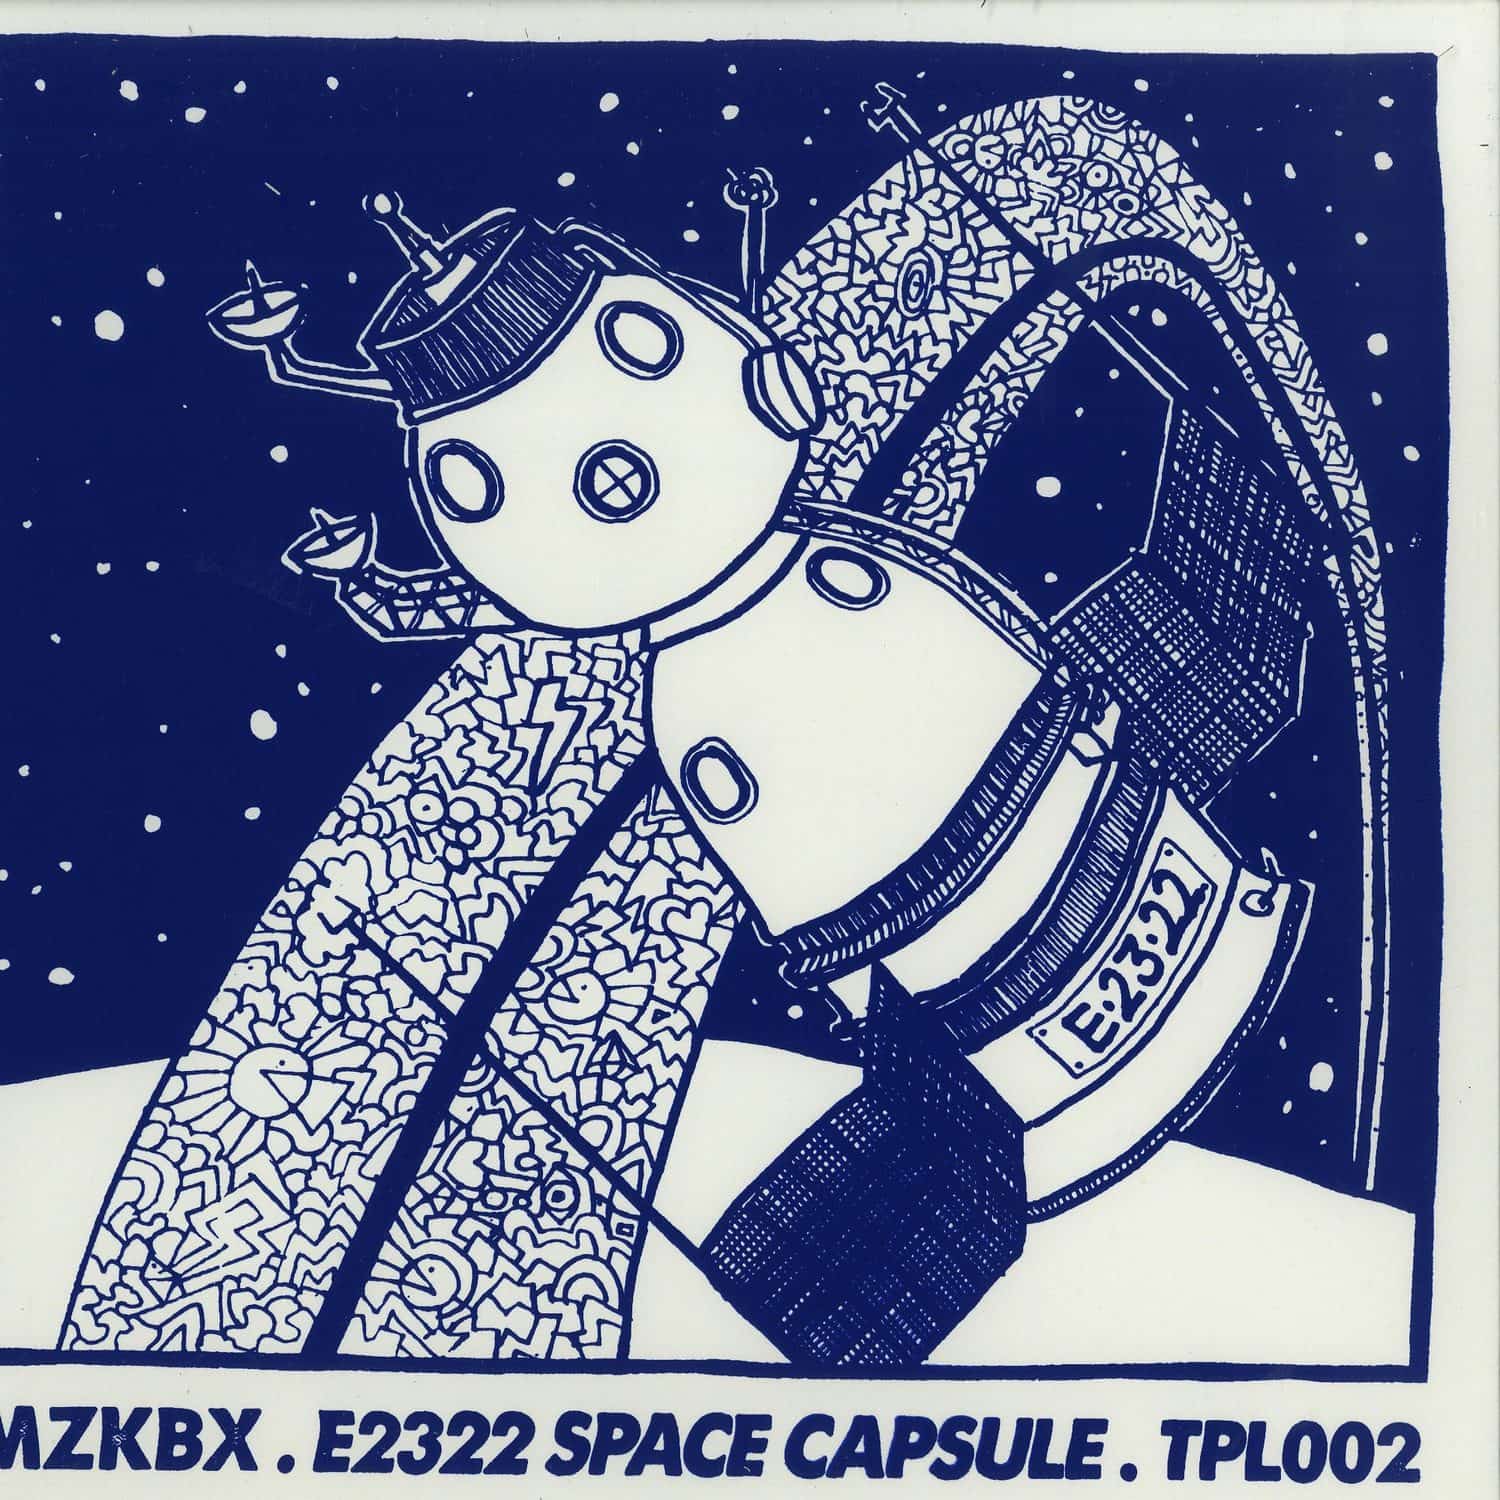 Mzkbx - SPACE CAPSULE E2322 EP 